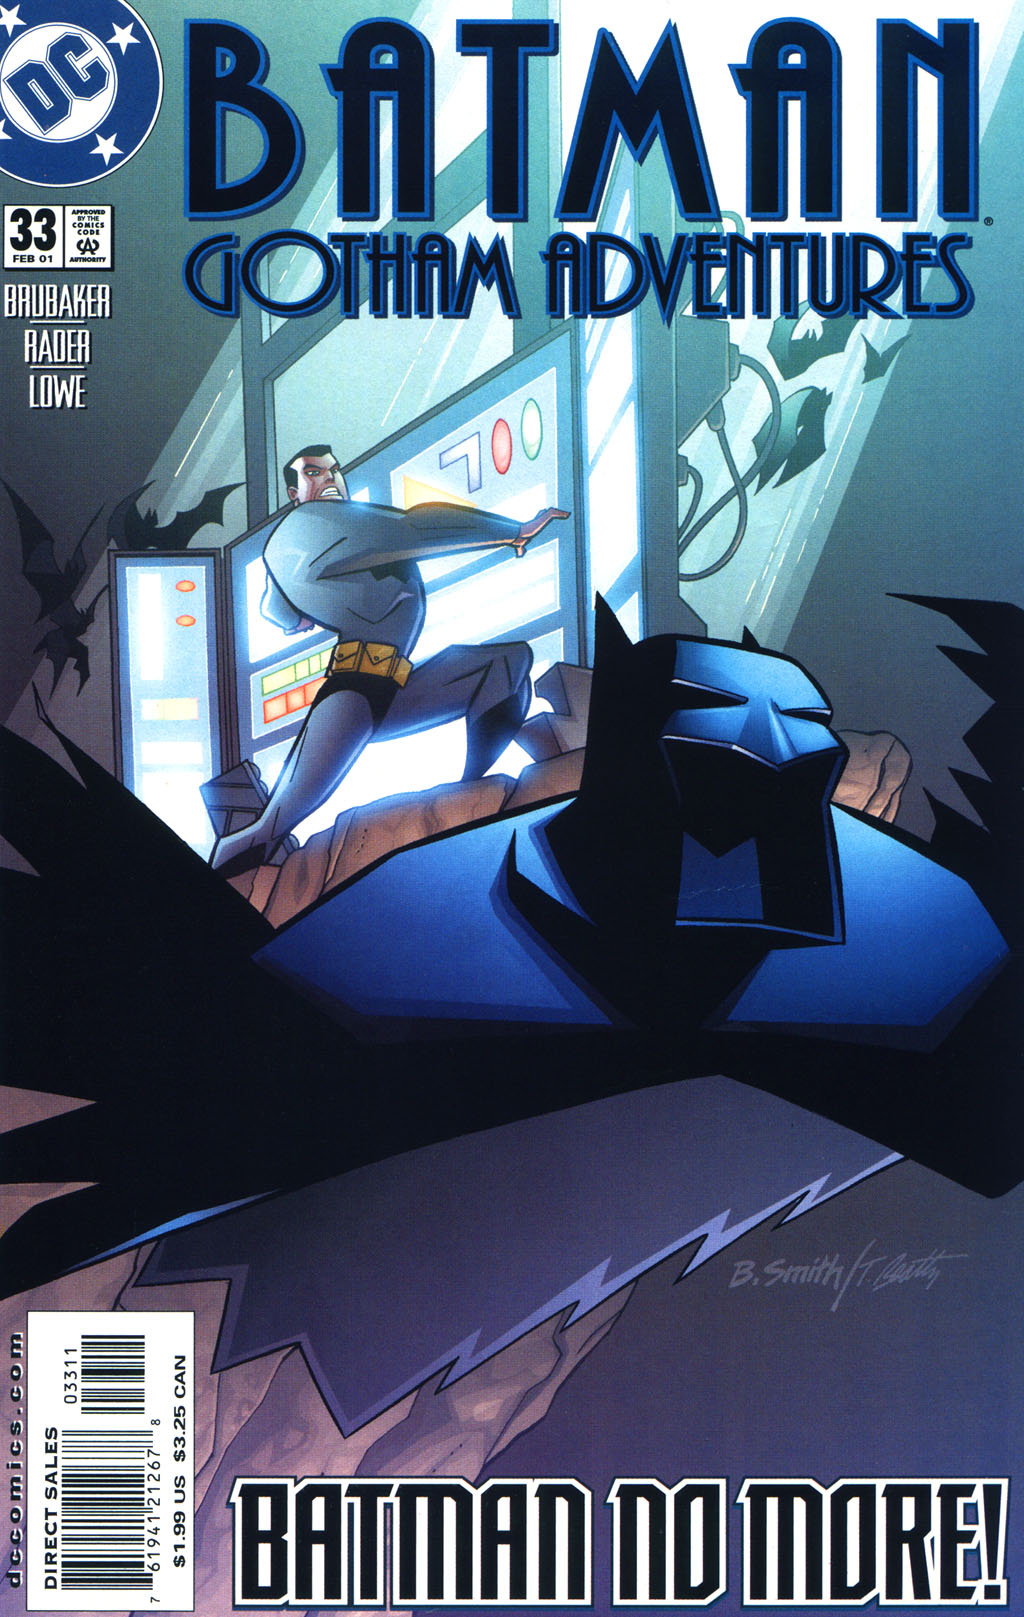 Batman Gotham Adventures Issue 33 | Read Batman Gotham Adventures Issue 33  comic online in high quality. Read Full Comic online for free - Read comics  online in high quality .| READ COMIC ONLINE